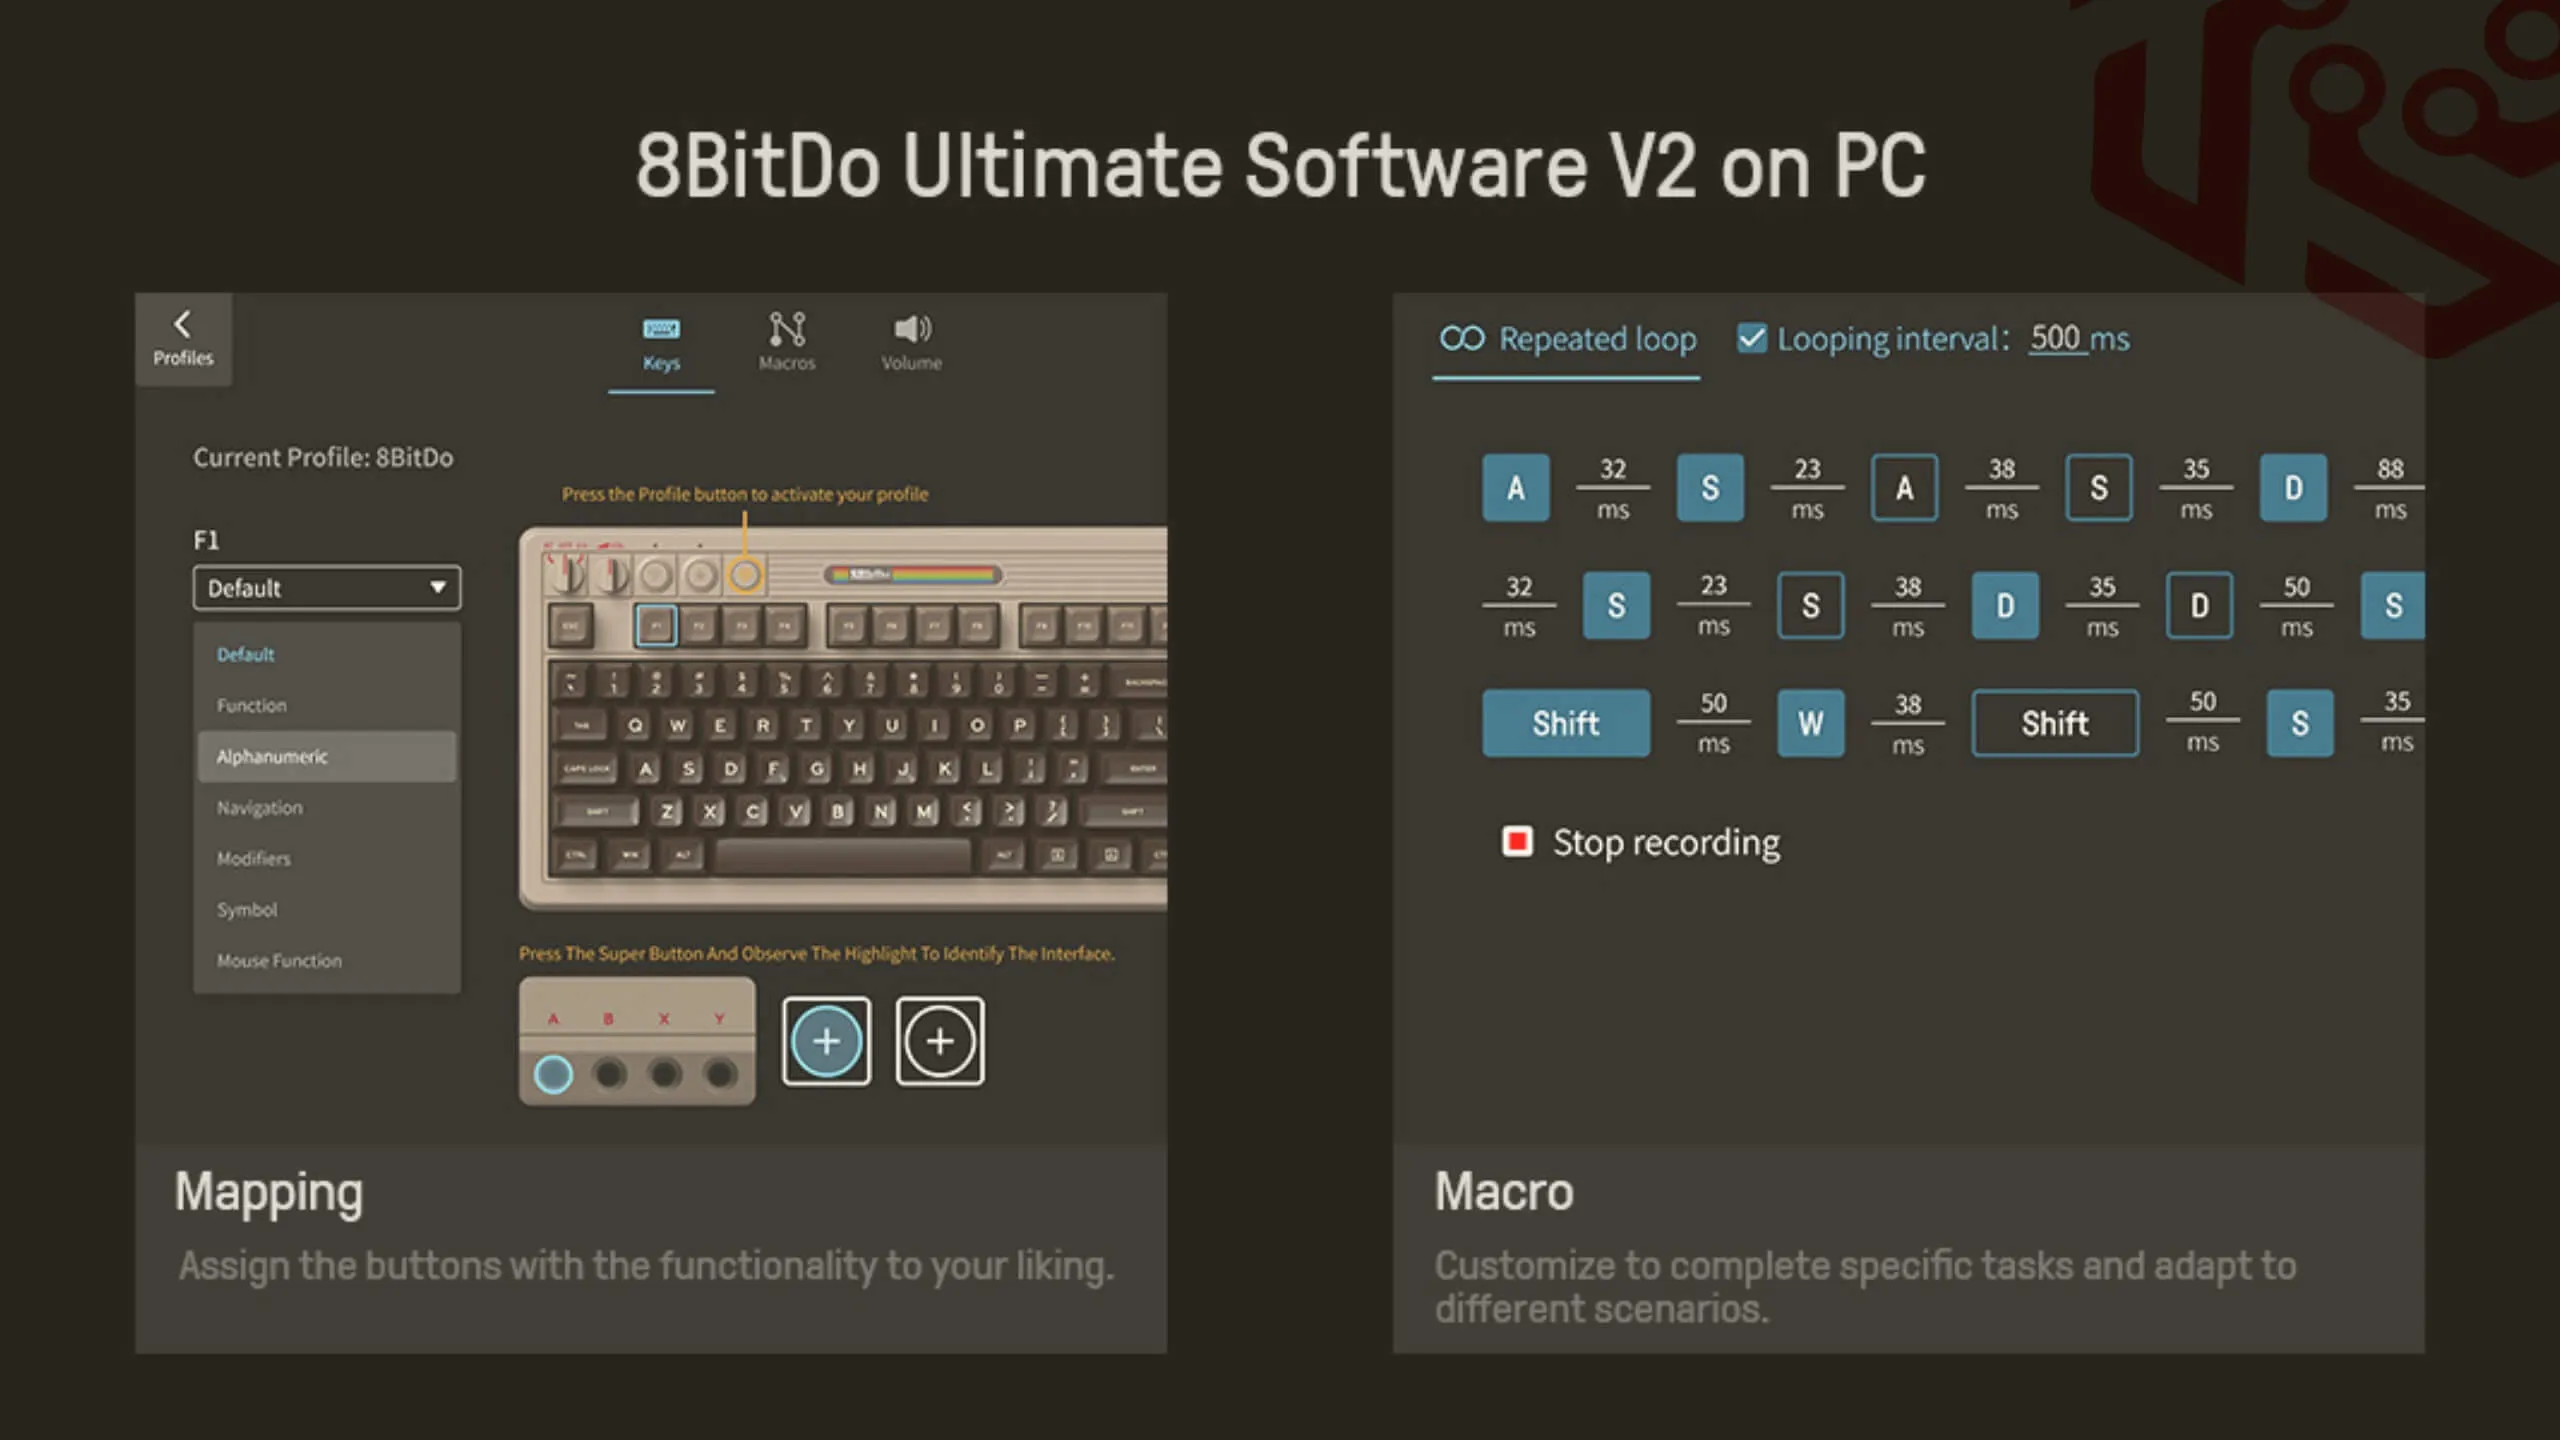 8BitDo macros and settings examples